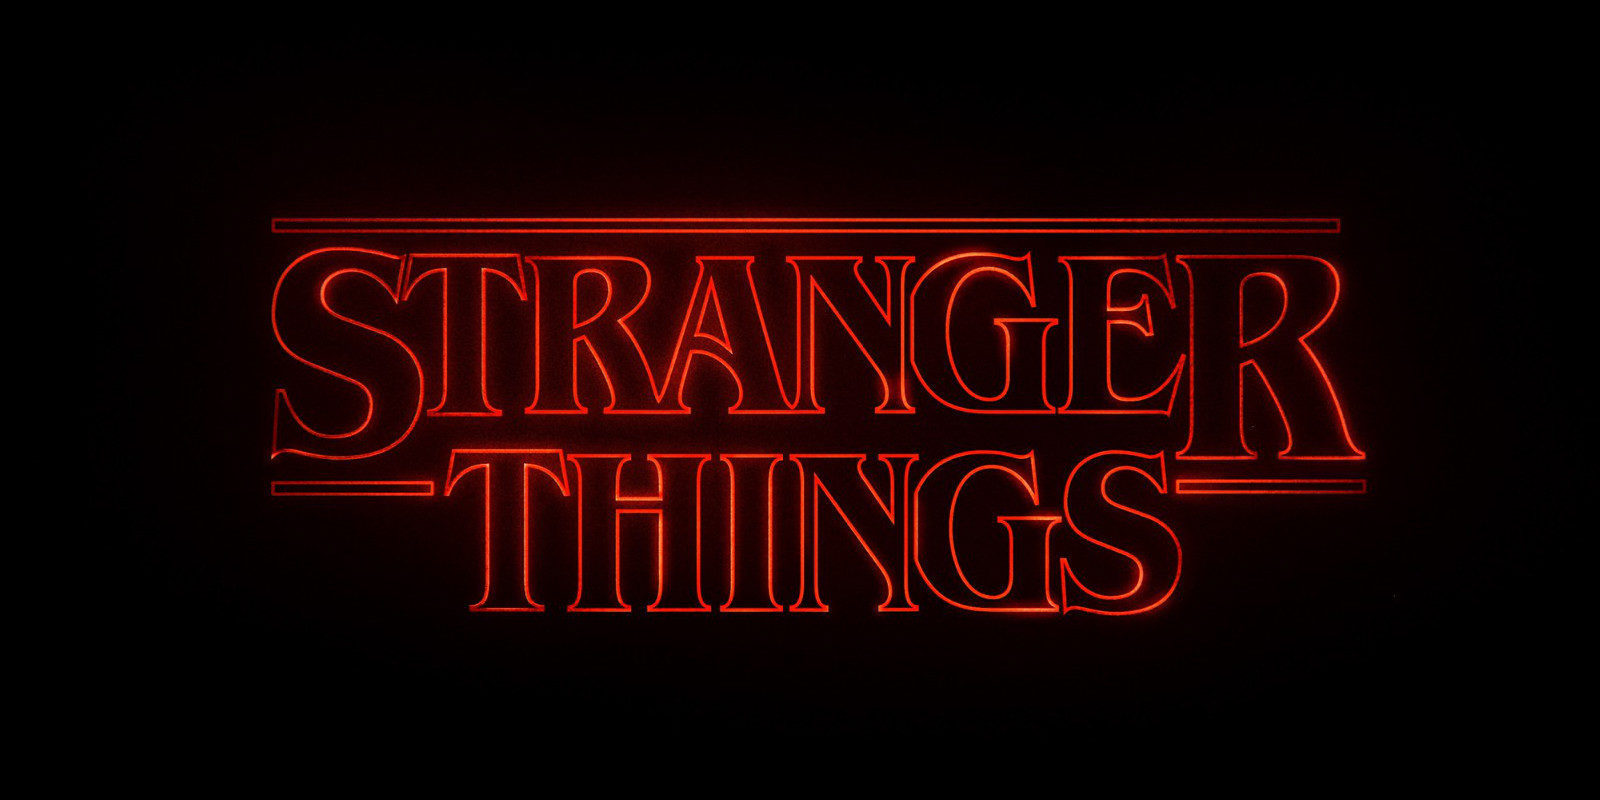 'Stranger Things': su homenaje al cine mediante pósters